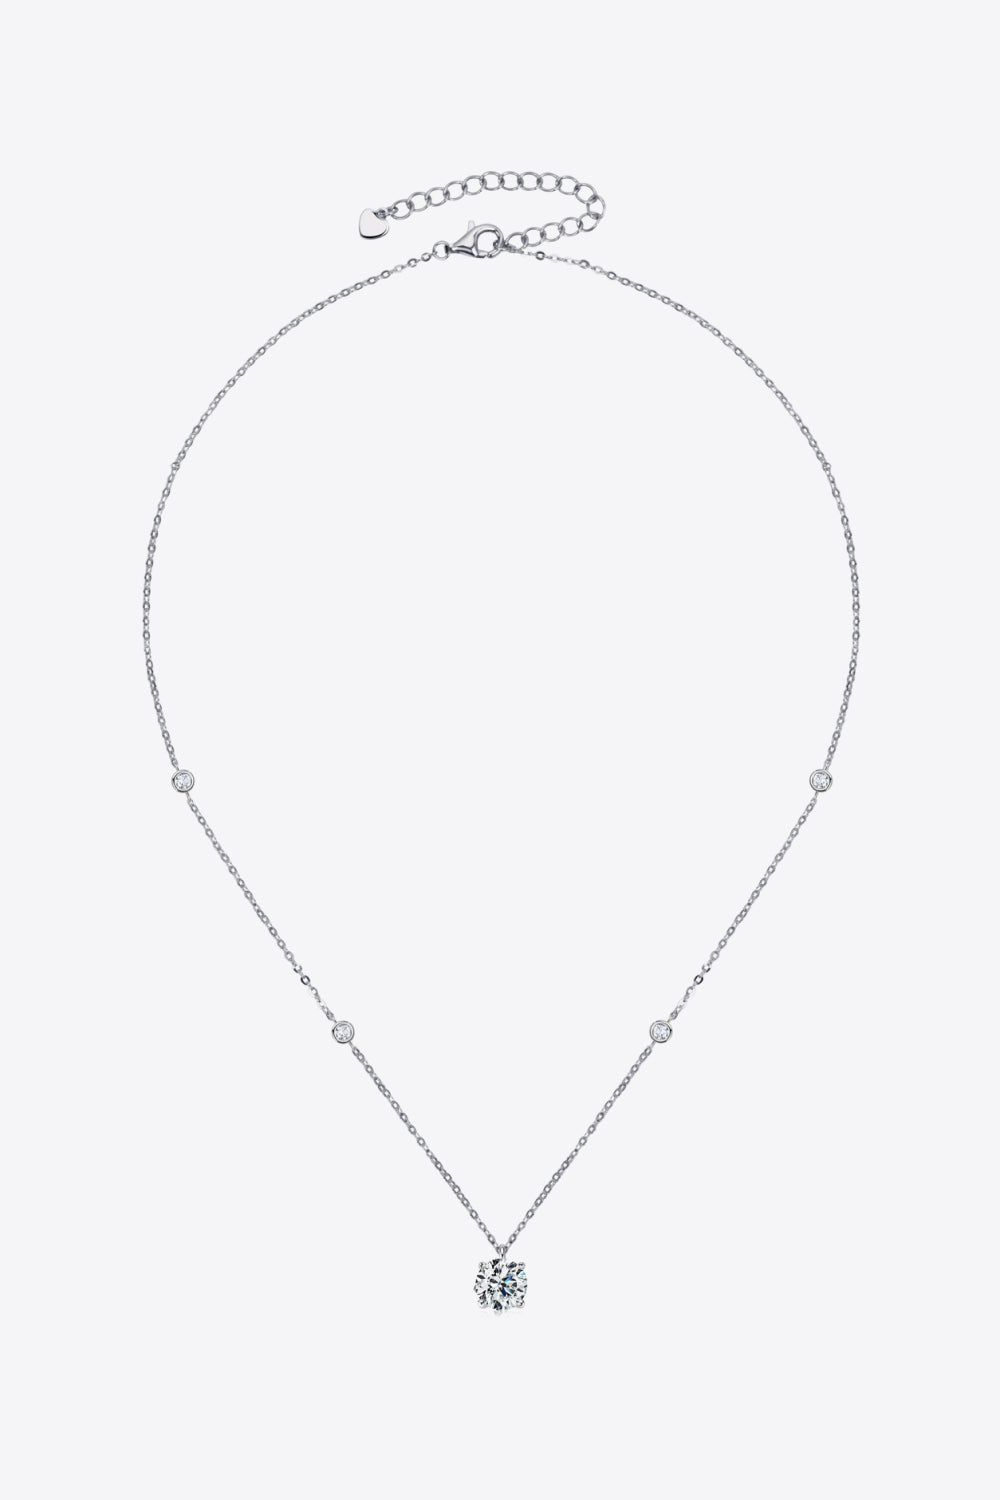 2 Carat Moissanite 4-Prong 925 Sterling Silver Necklace-Ever Joy